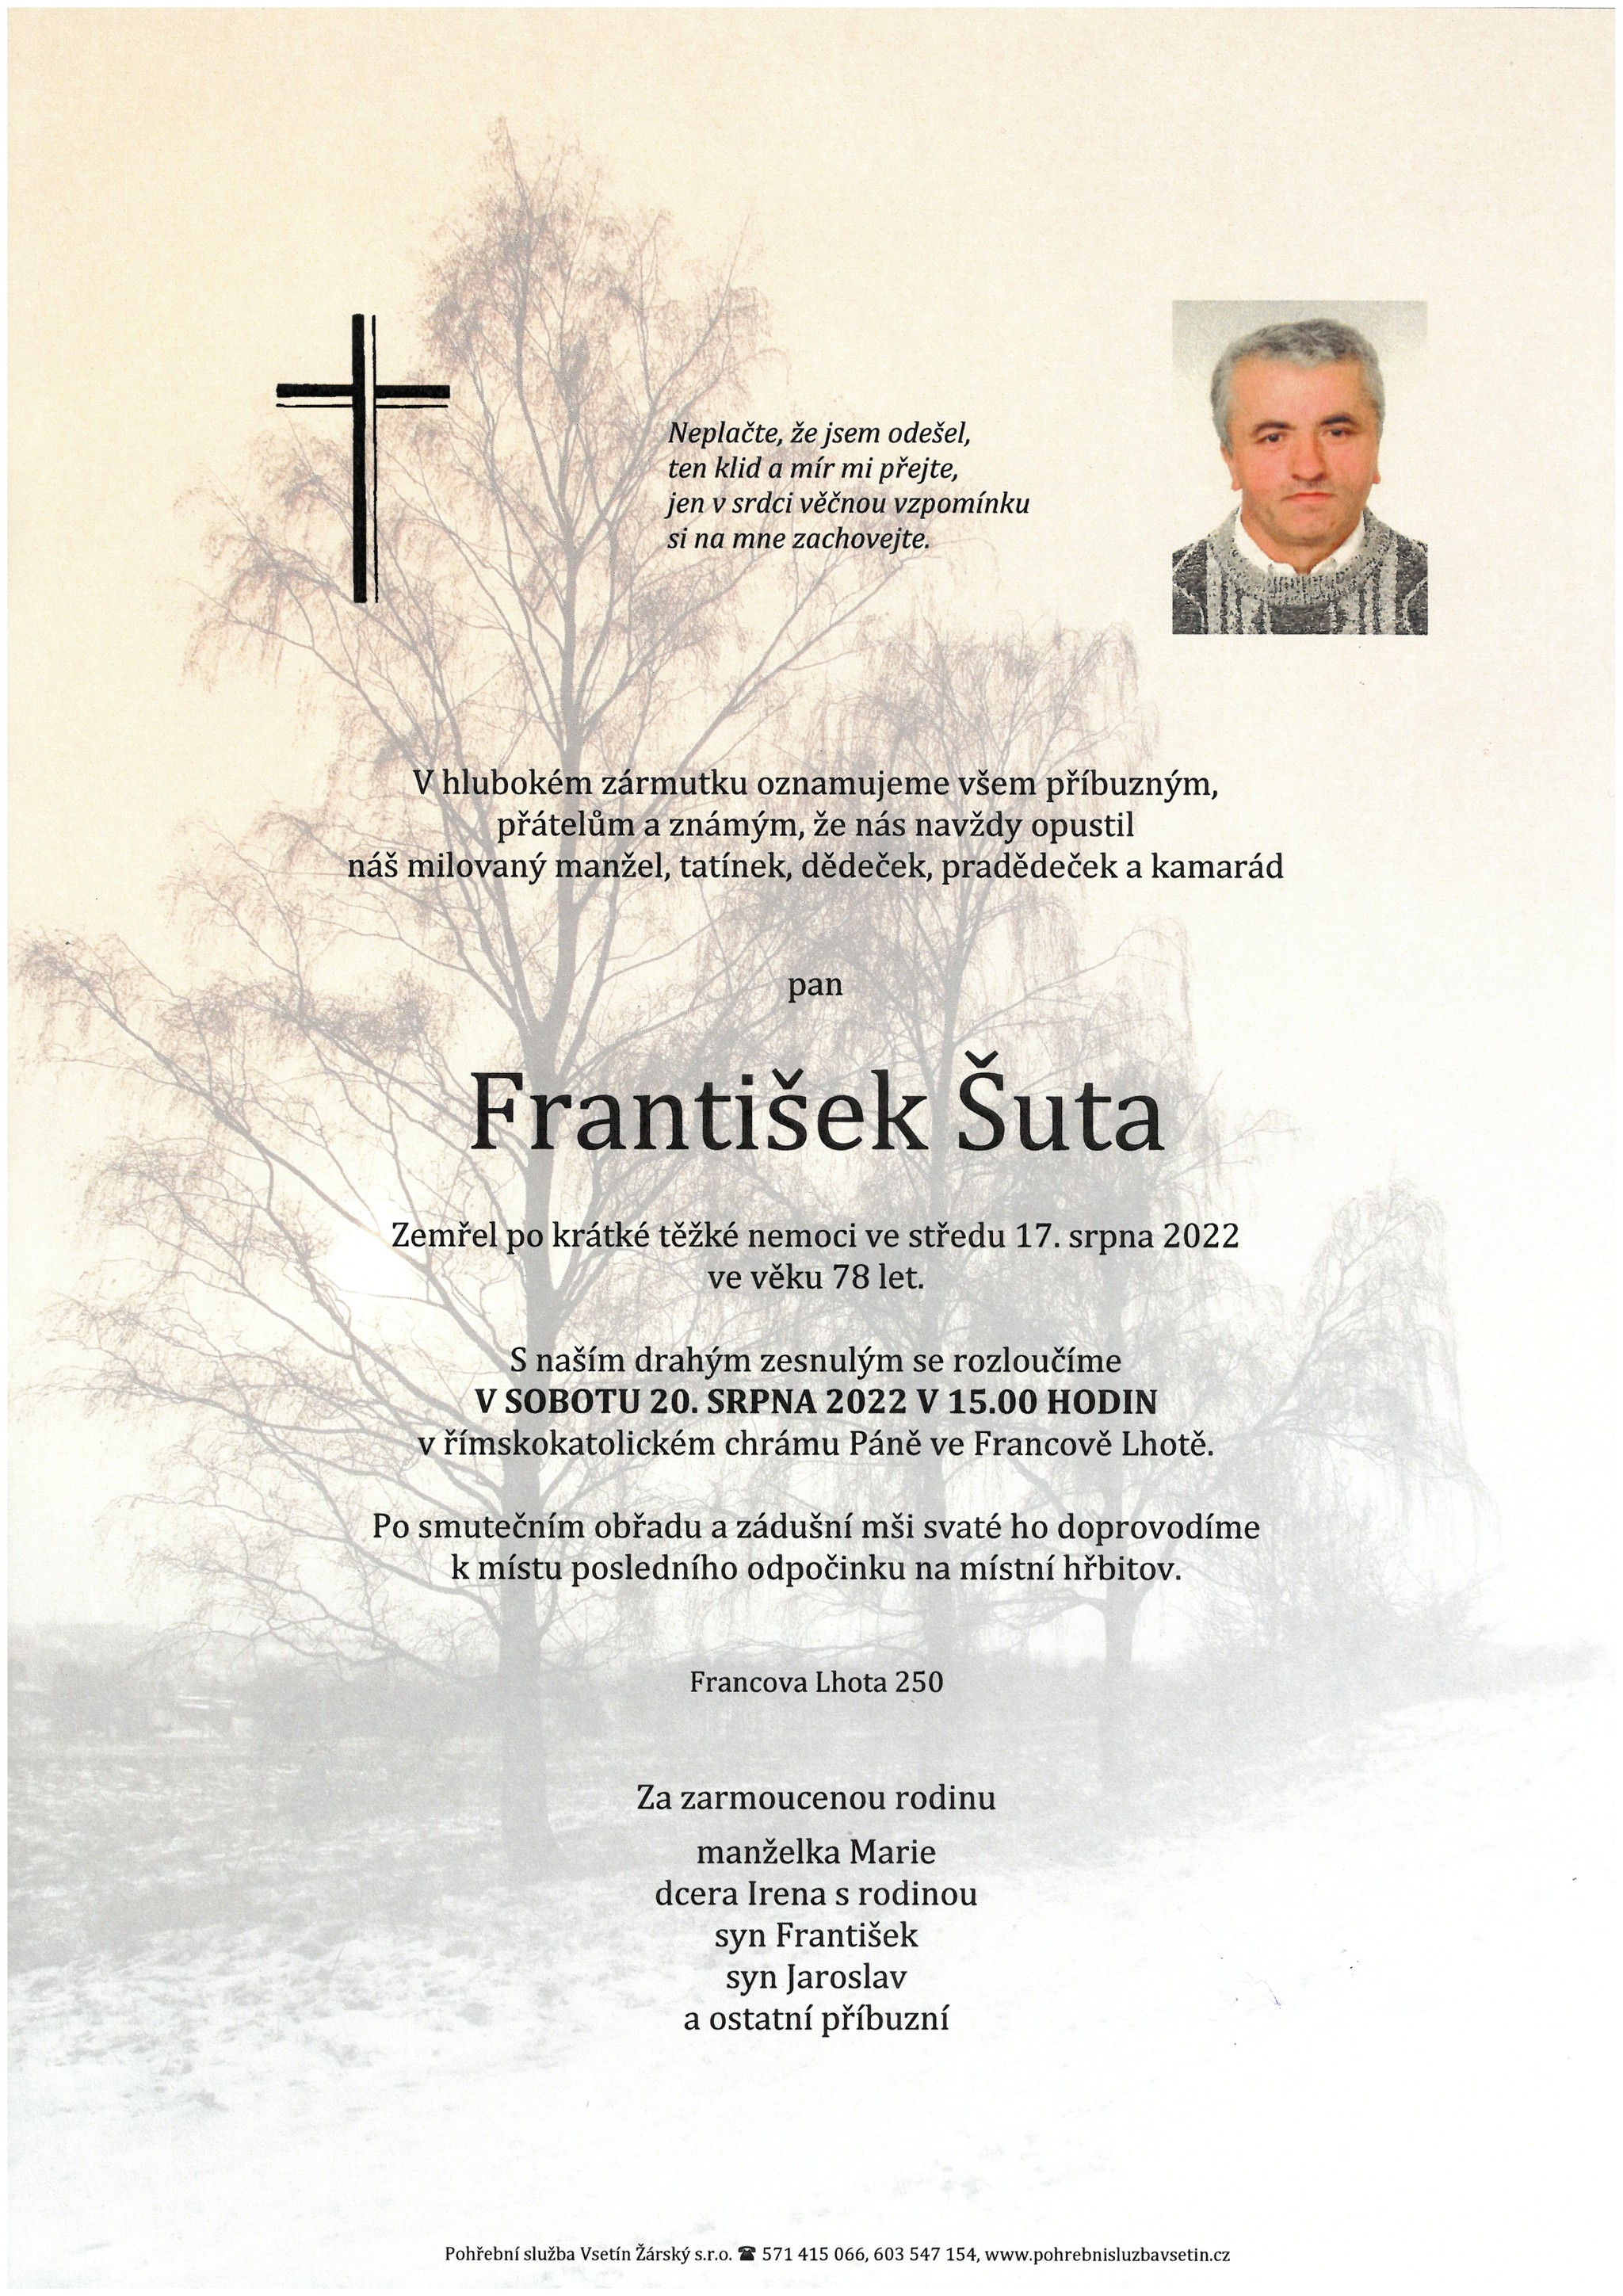 František Šuta